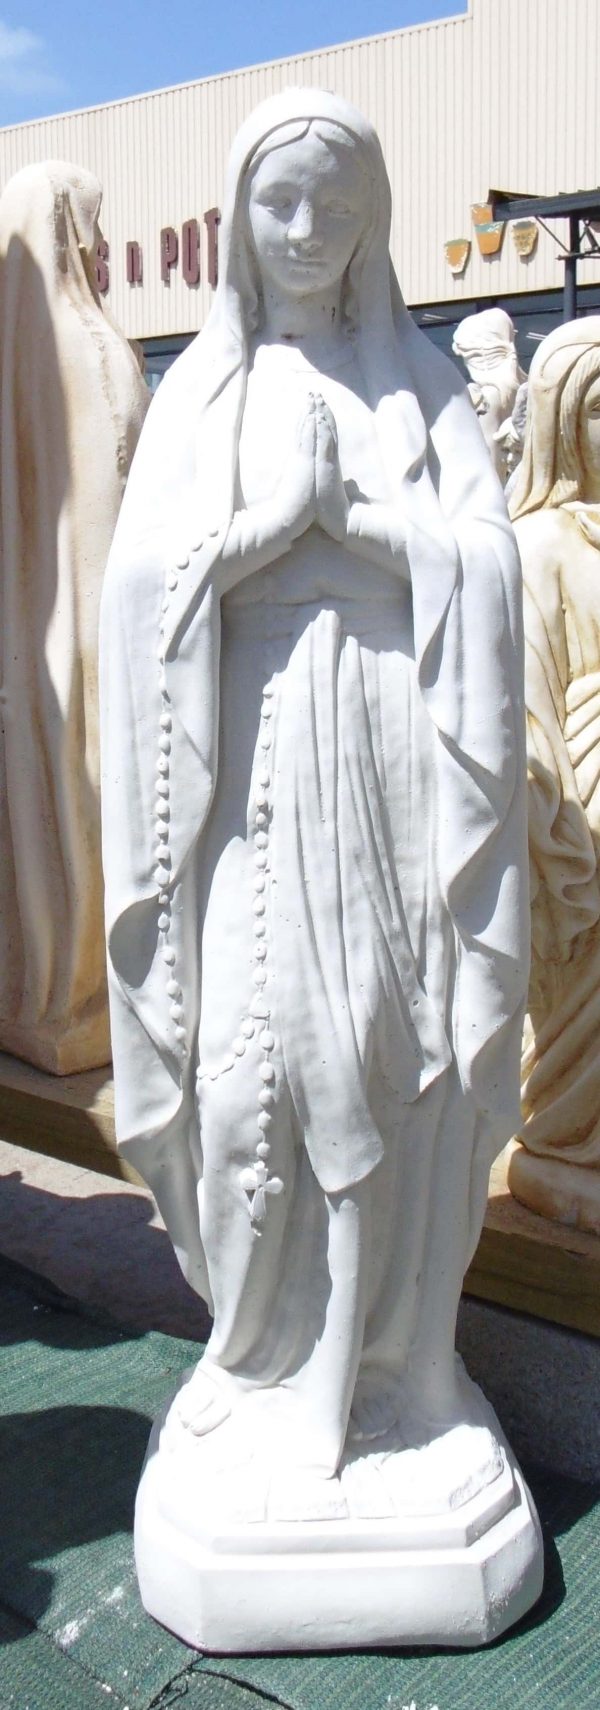 #6 Mary of Lourdes small concrete statue